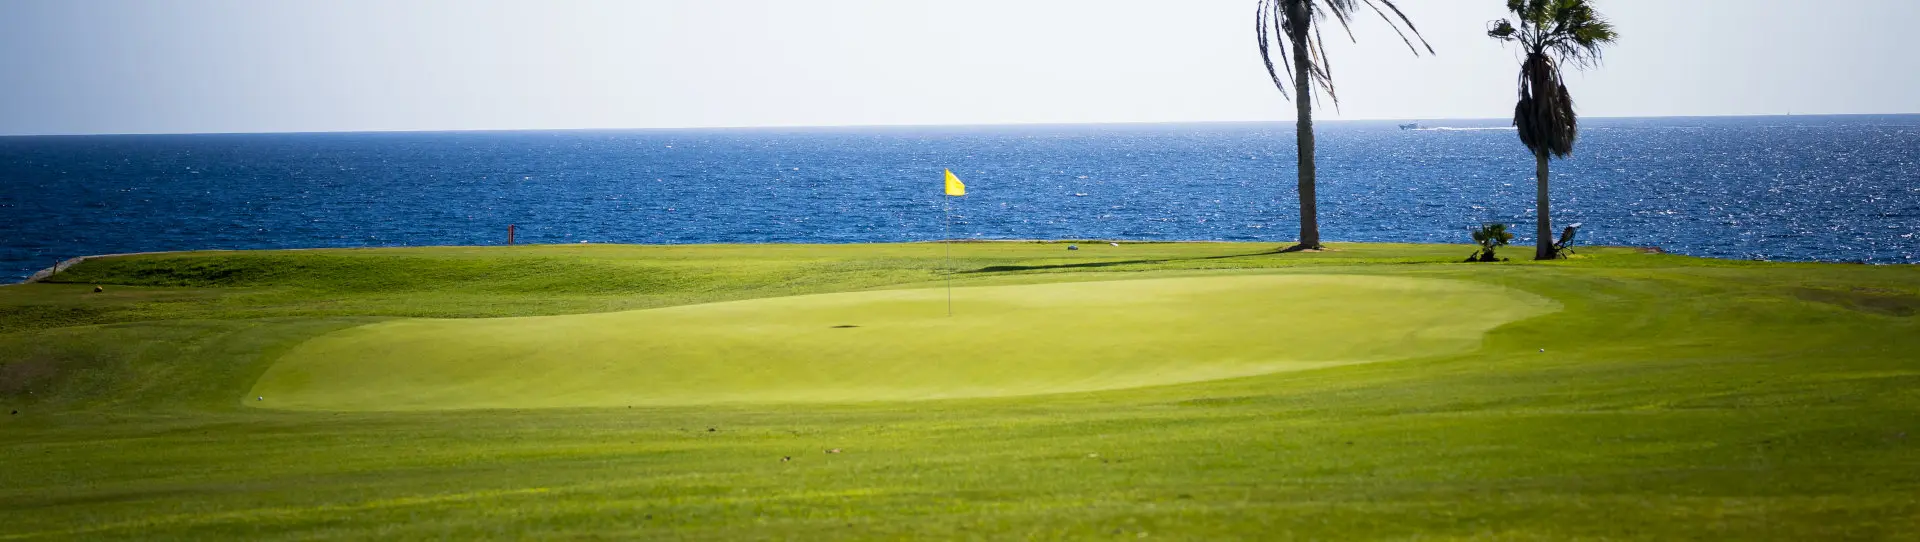 Spain golf holidays - Amarilla Tri Experience - Photo 1